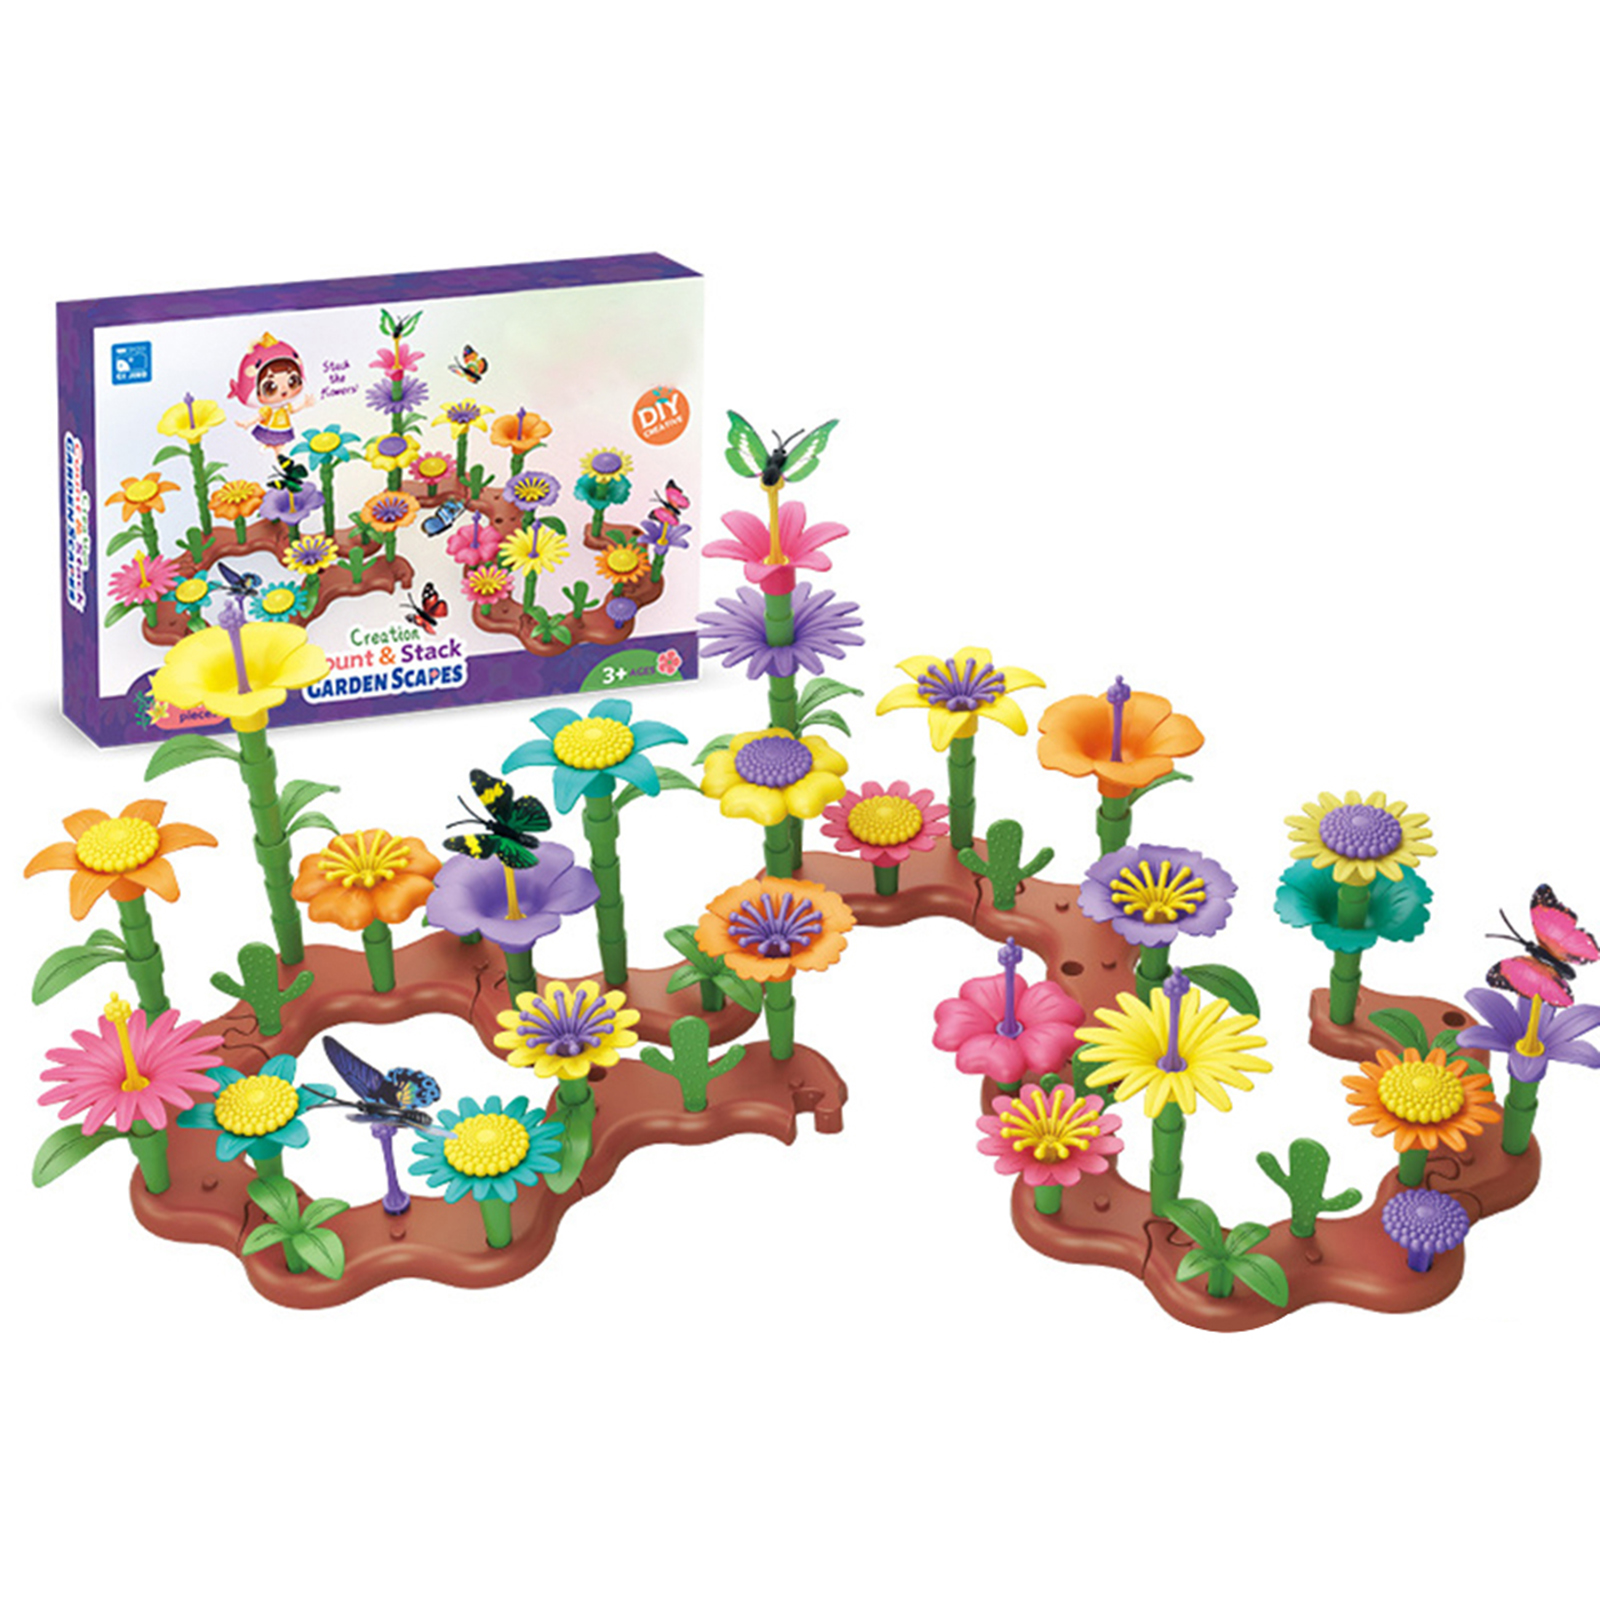 Flower Garden Building Toys Colorful Interconnecting Blocks Building Floral Arrangement Playset Toys For Kids